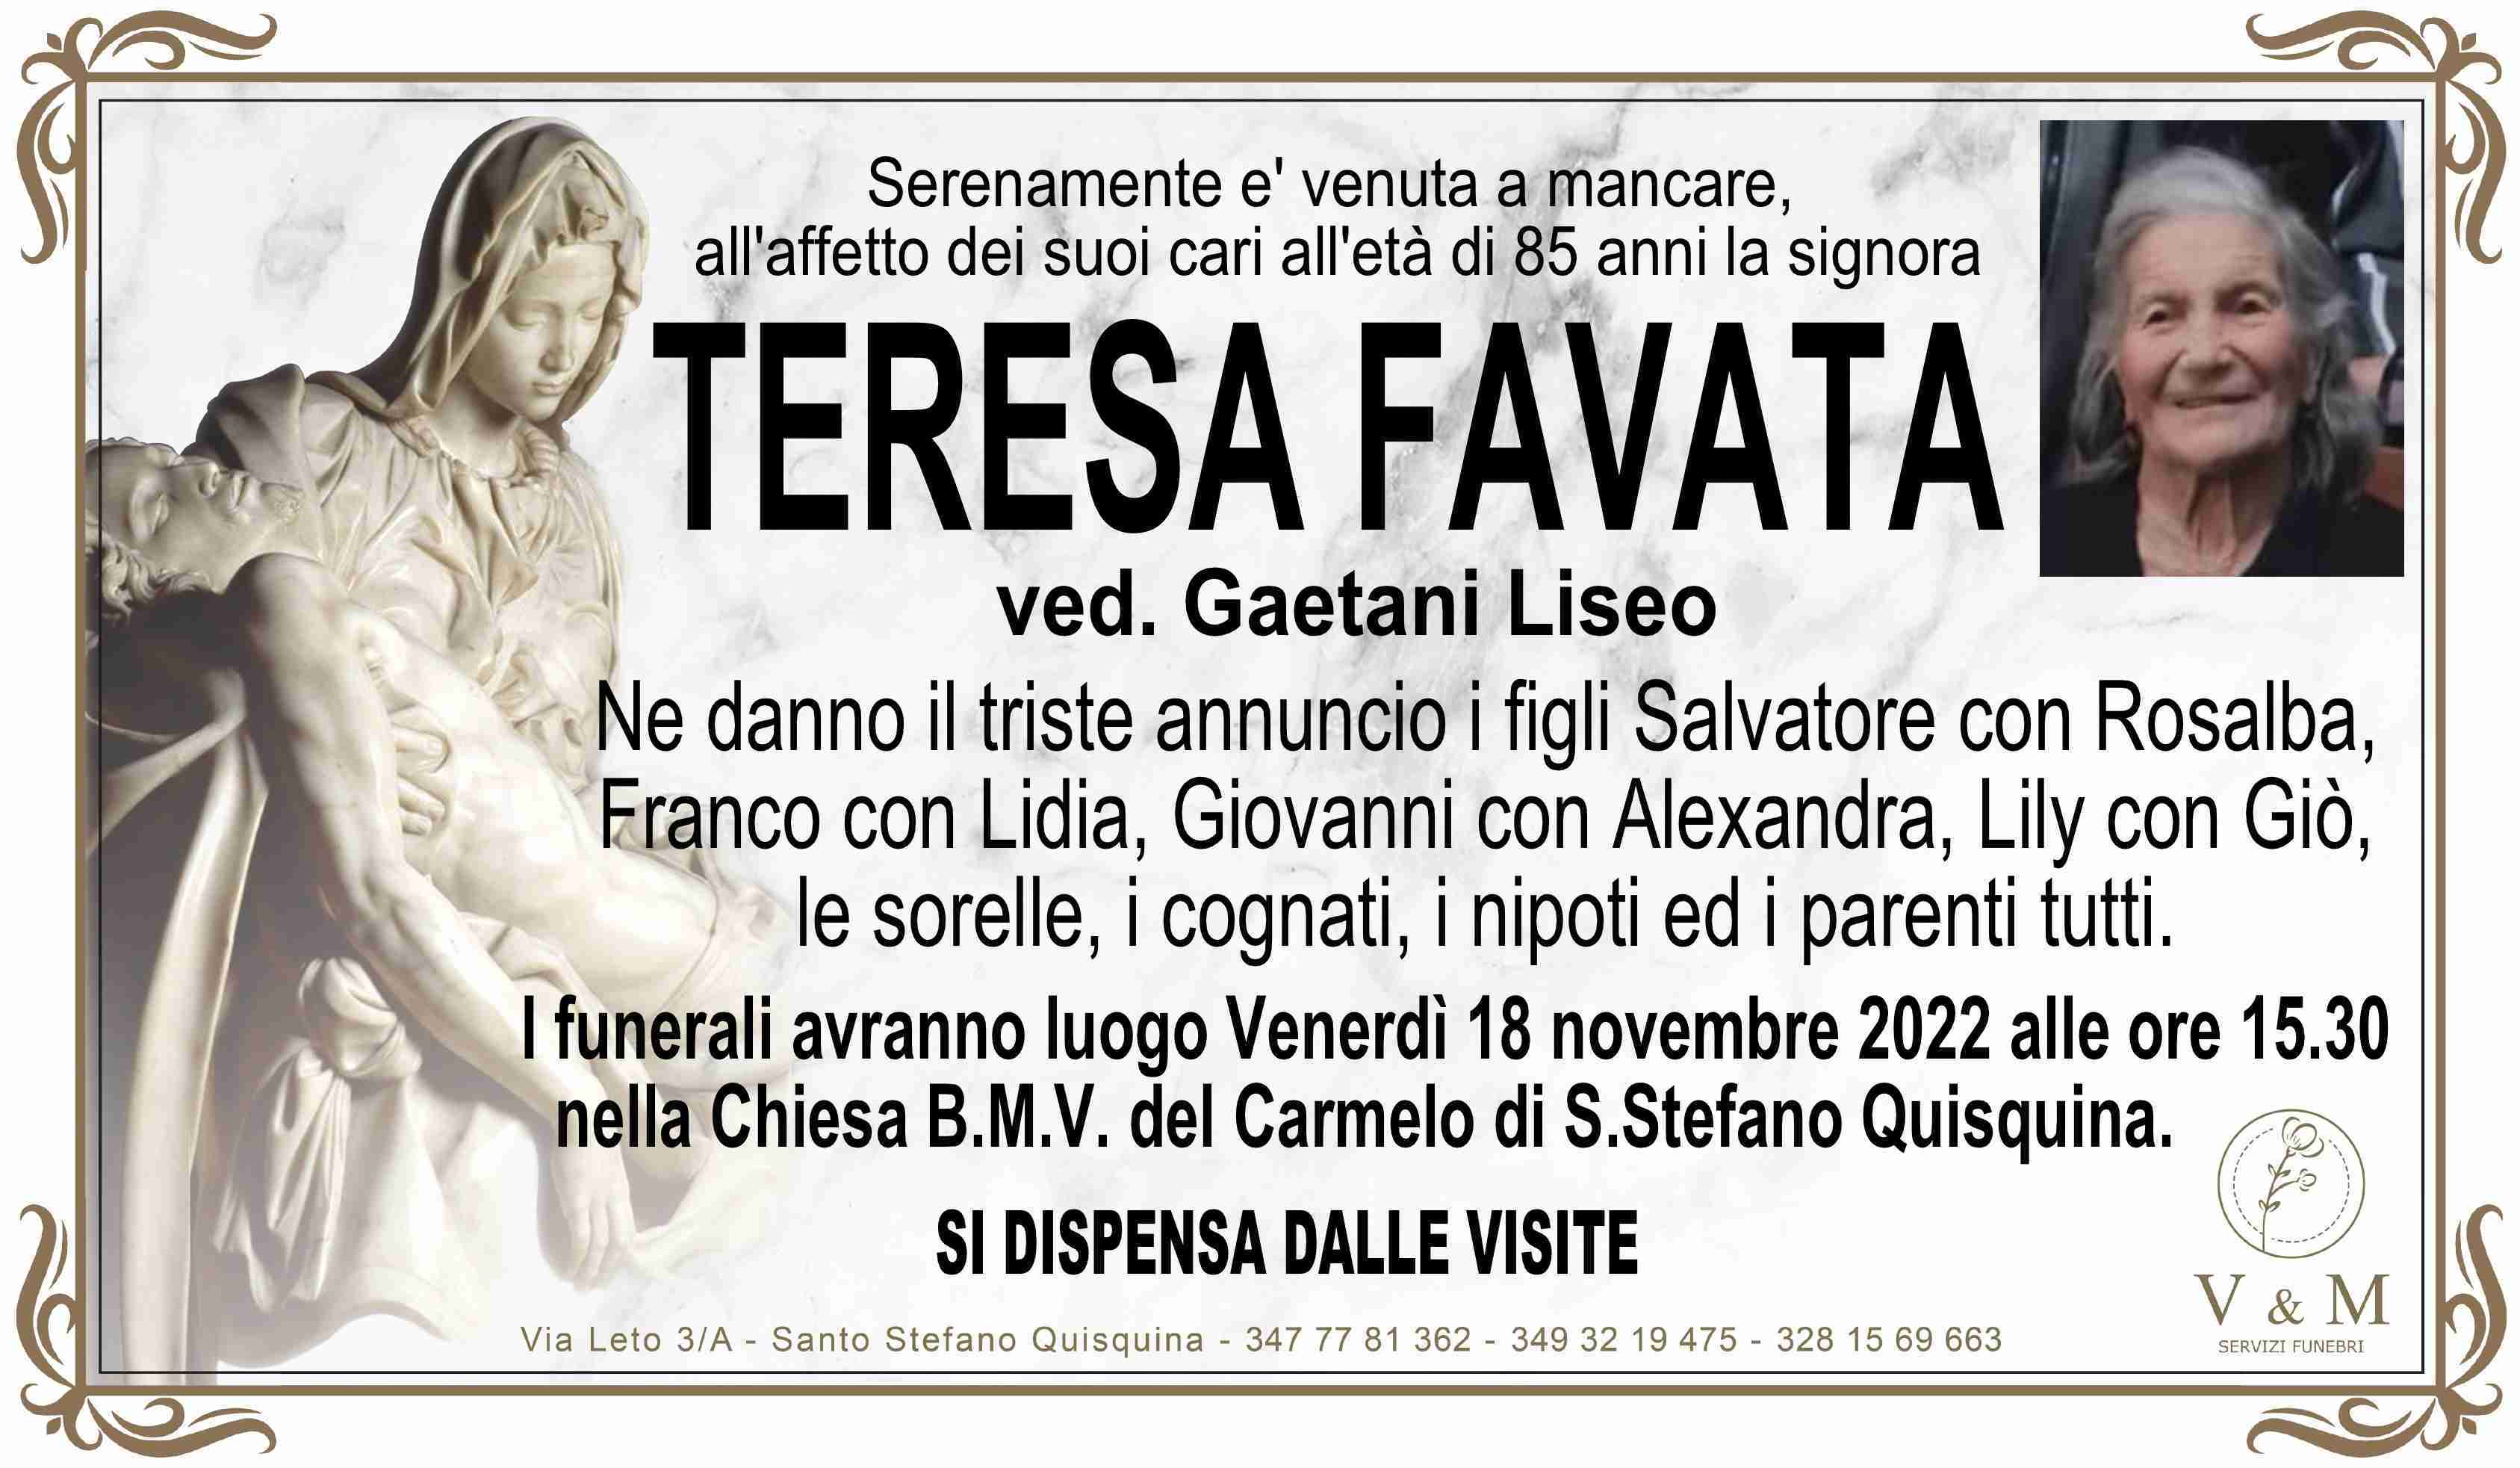 Teresa Favata